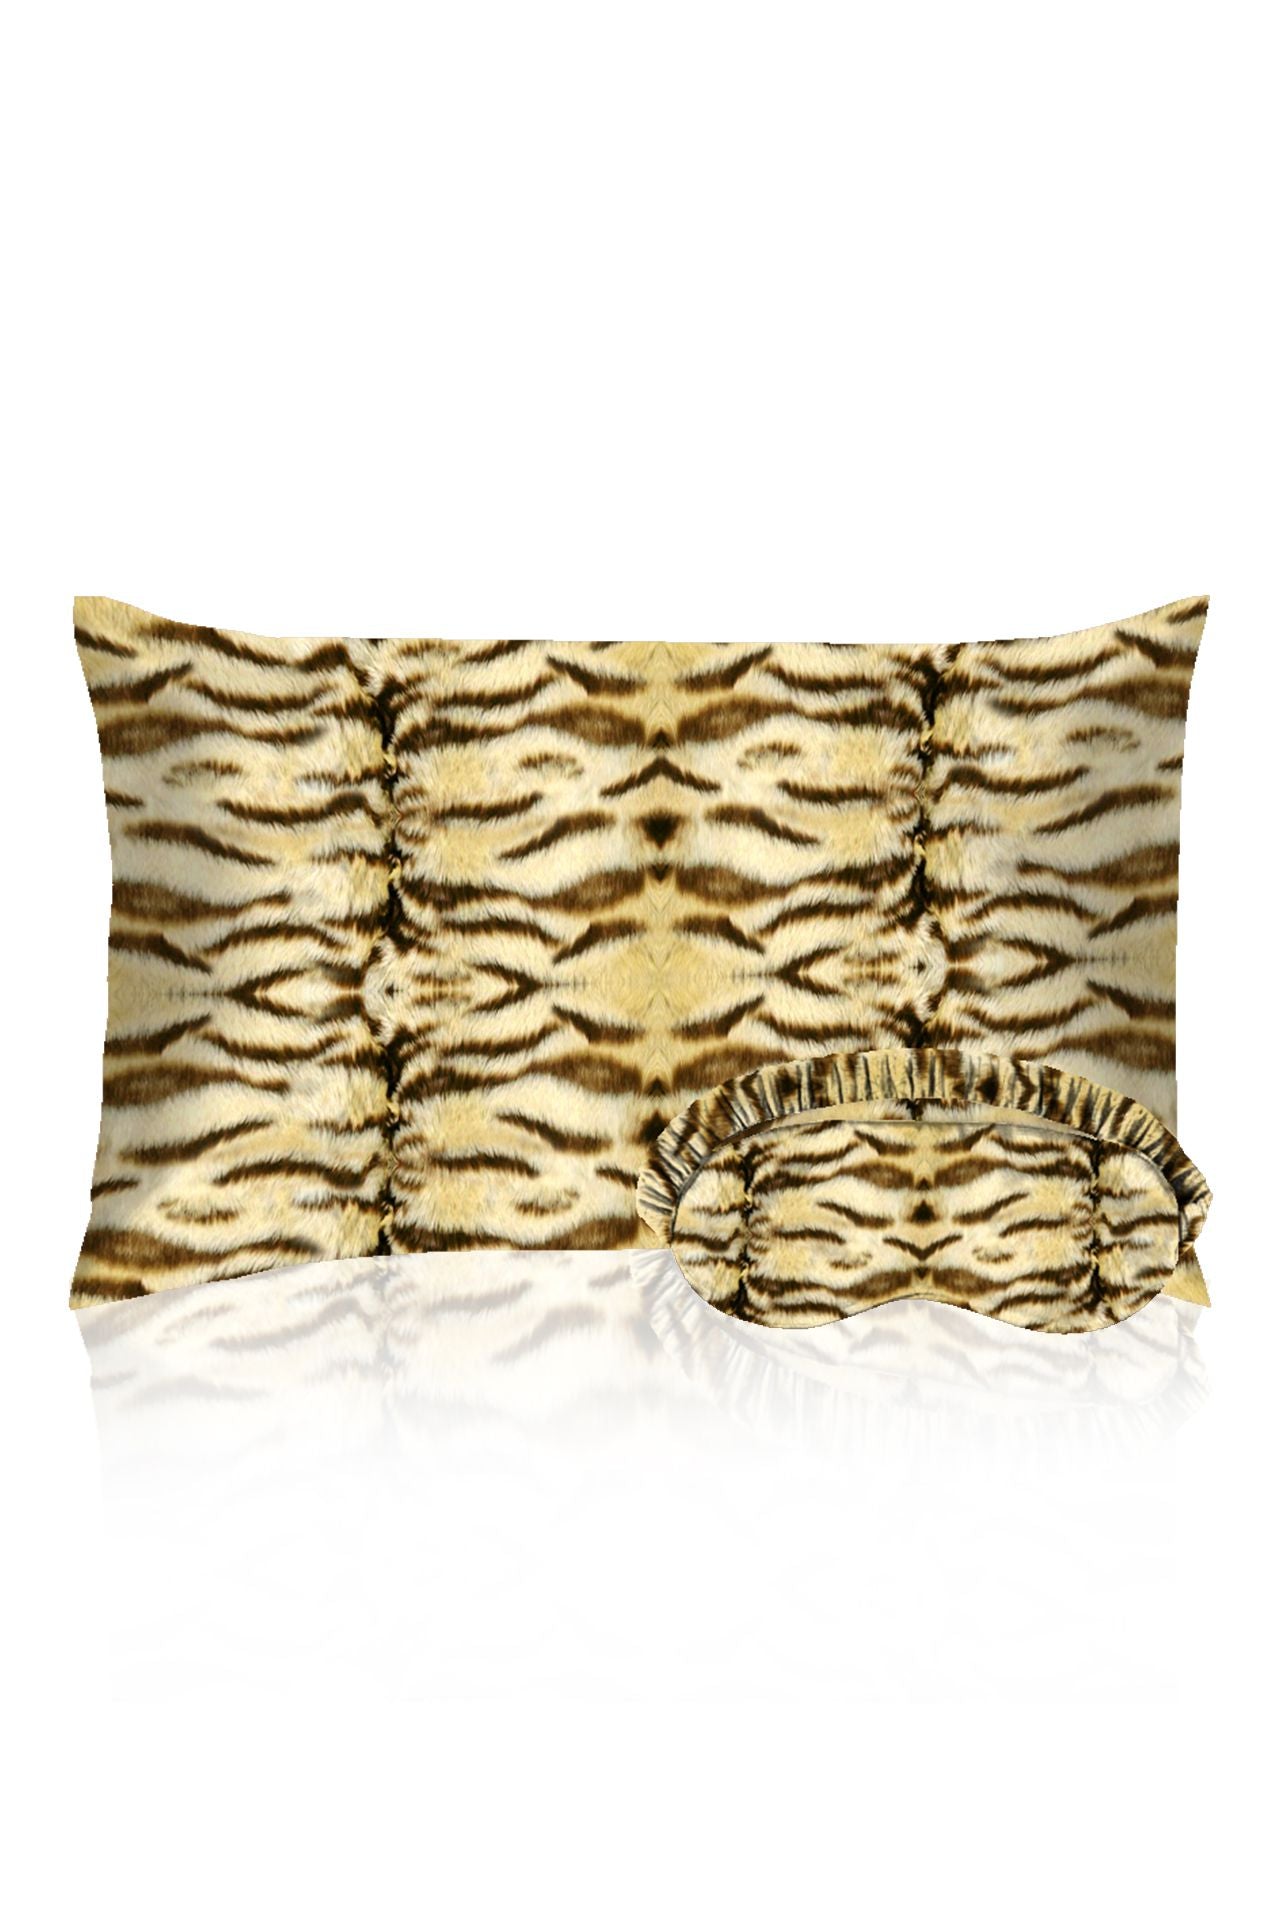 Luxury Decorative Pillow Cover